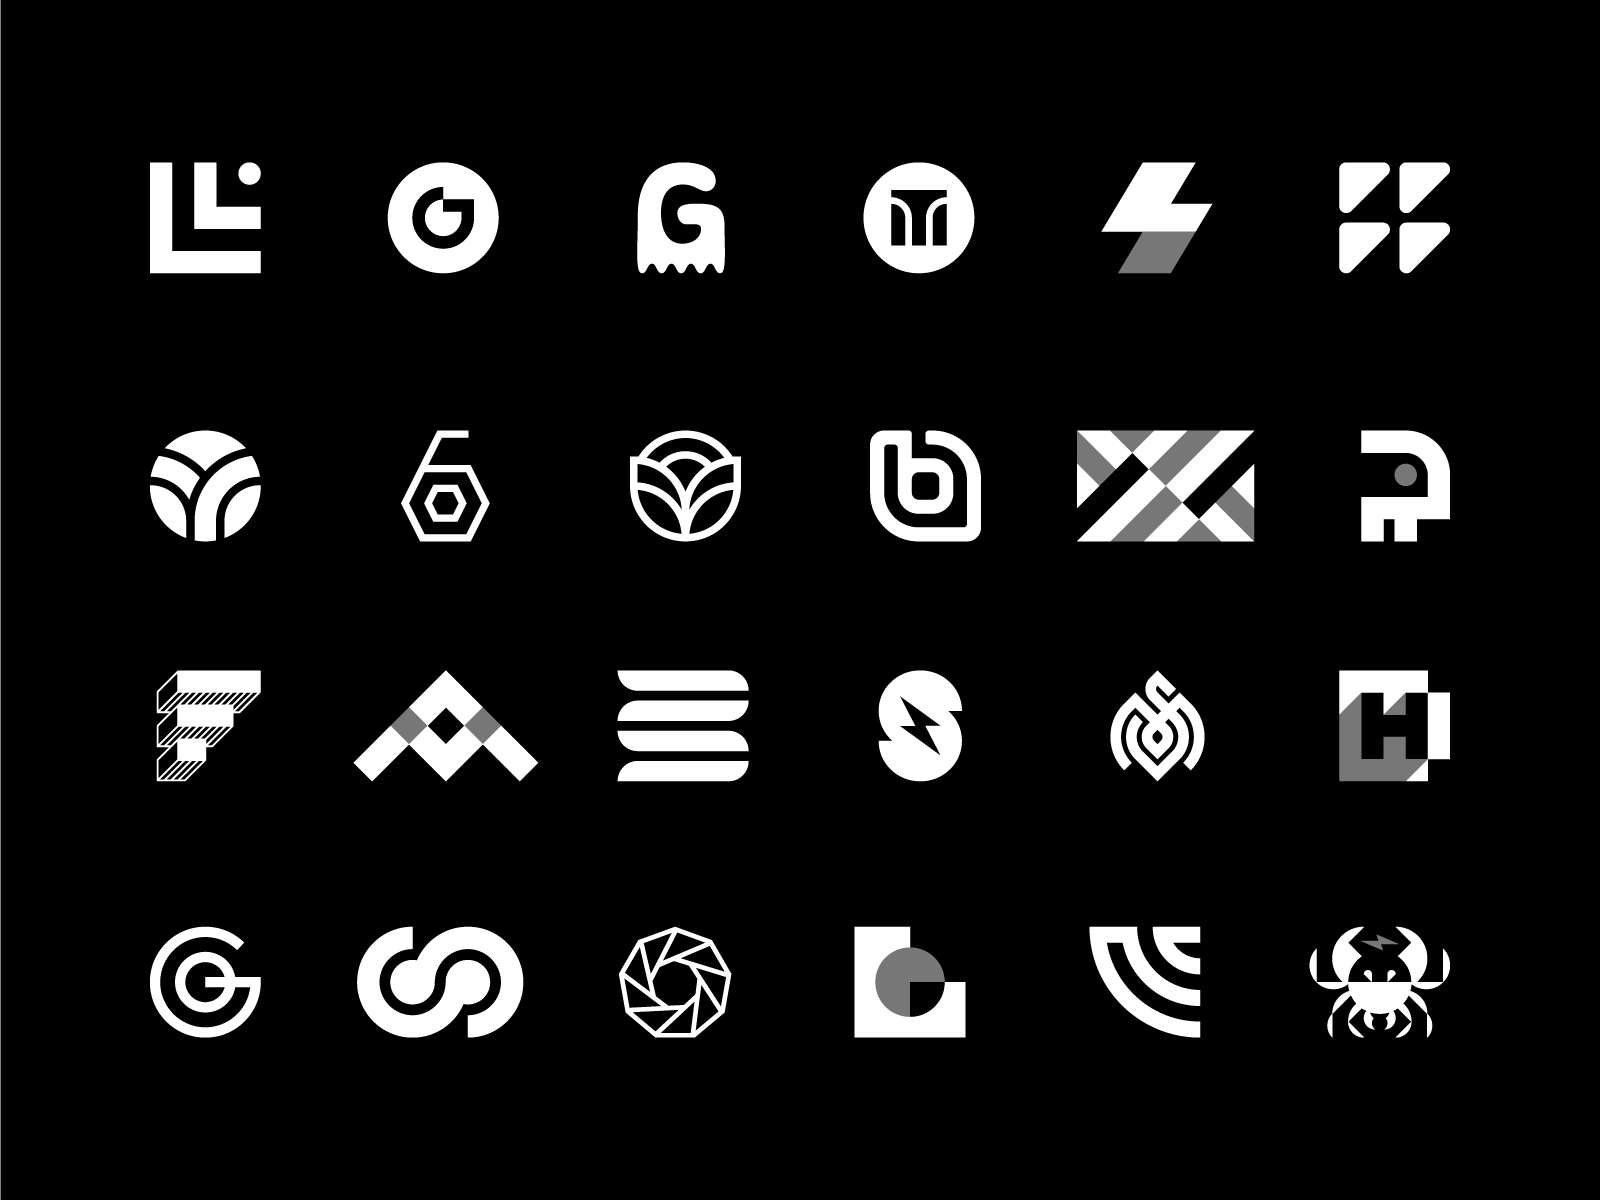 24 Logos I’ve Designed in the Last 24 Months by Blankenship on Dribbble